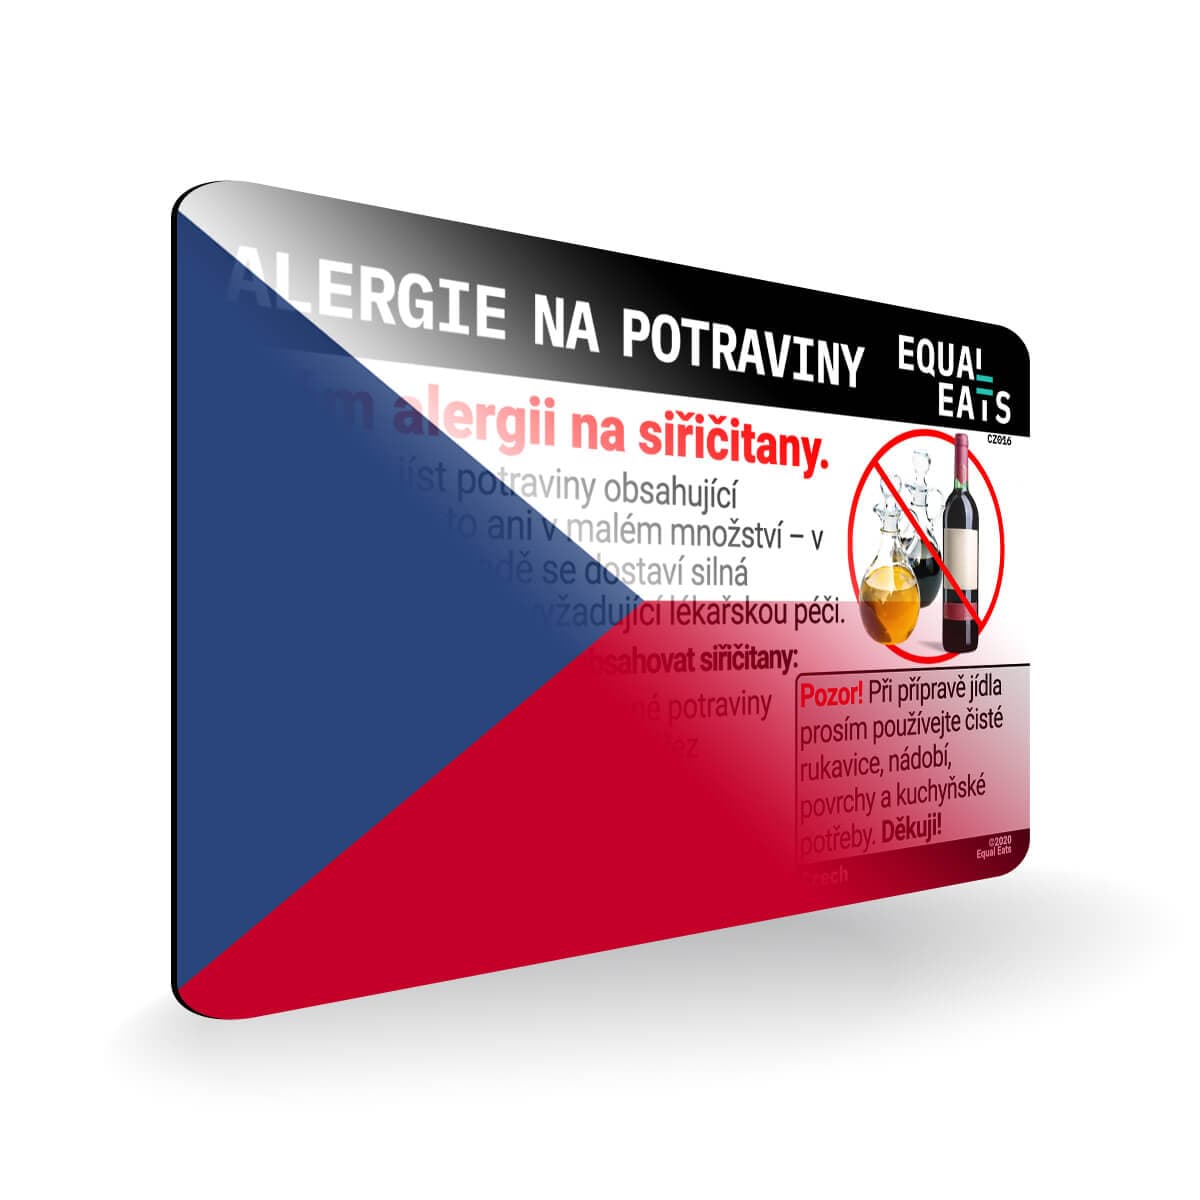 Sulfite Allergy in Czech. Sulfite Allergy Card for Czech Republic